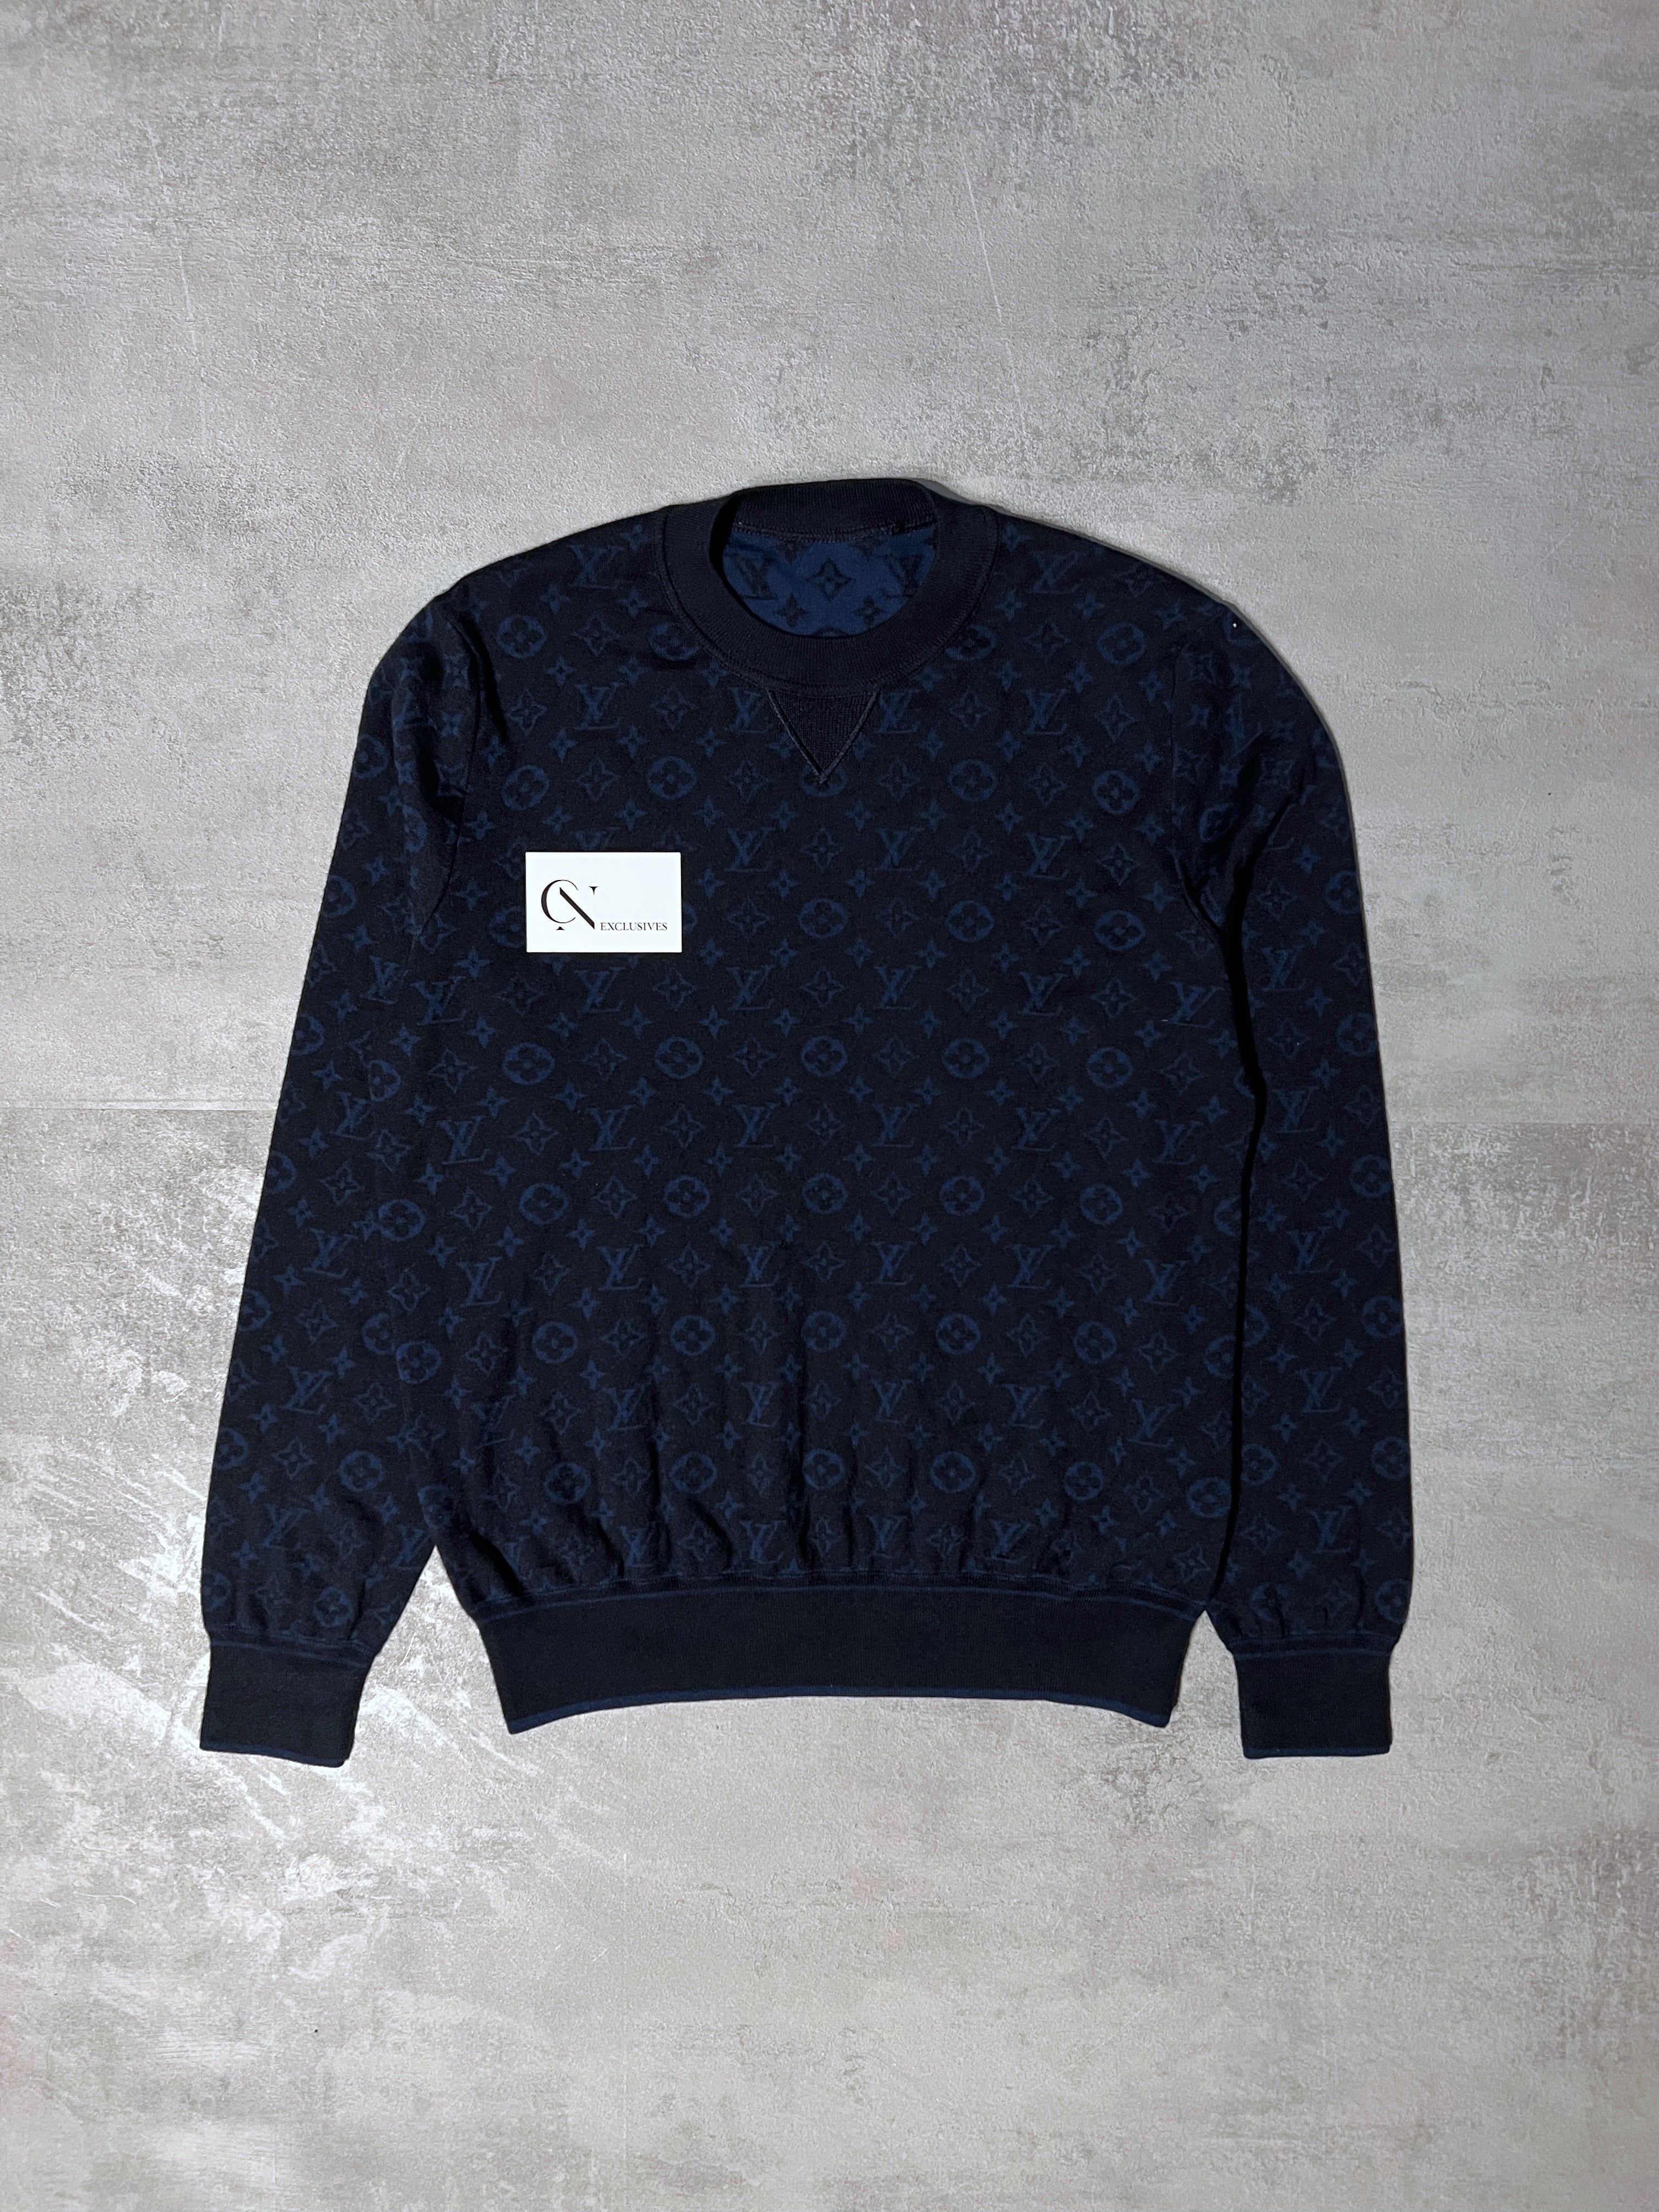 Louis Vuitton Neon Monogram Back Cashmere Sweater